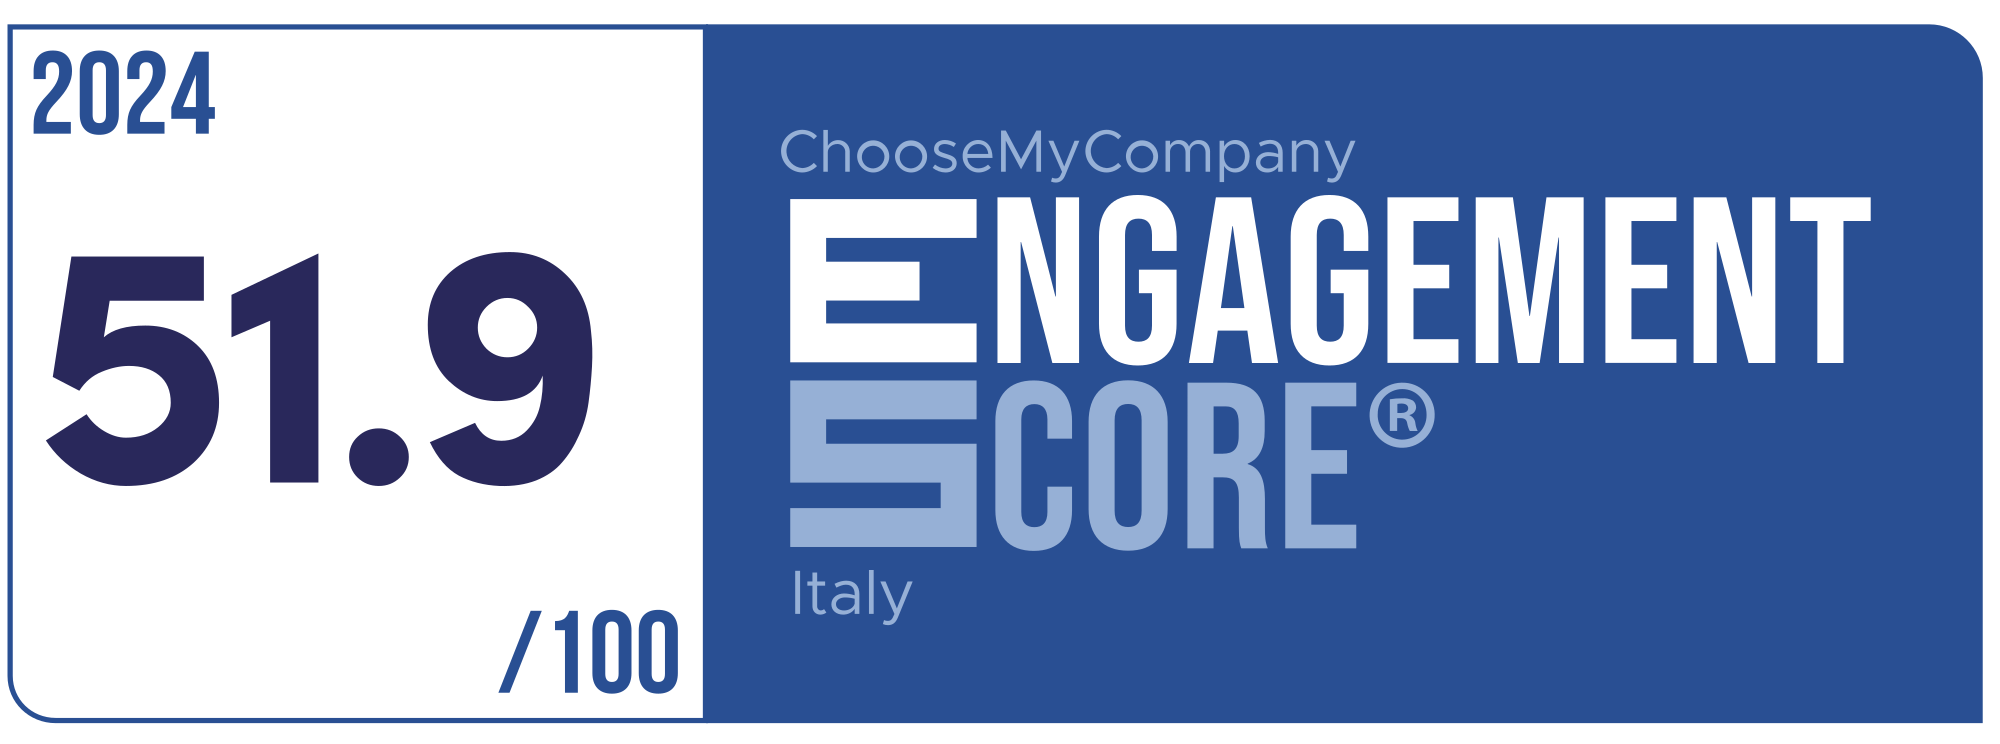 Label Engagement Score 2024 Italy